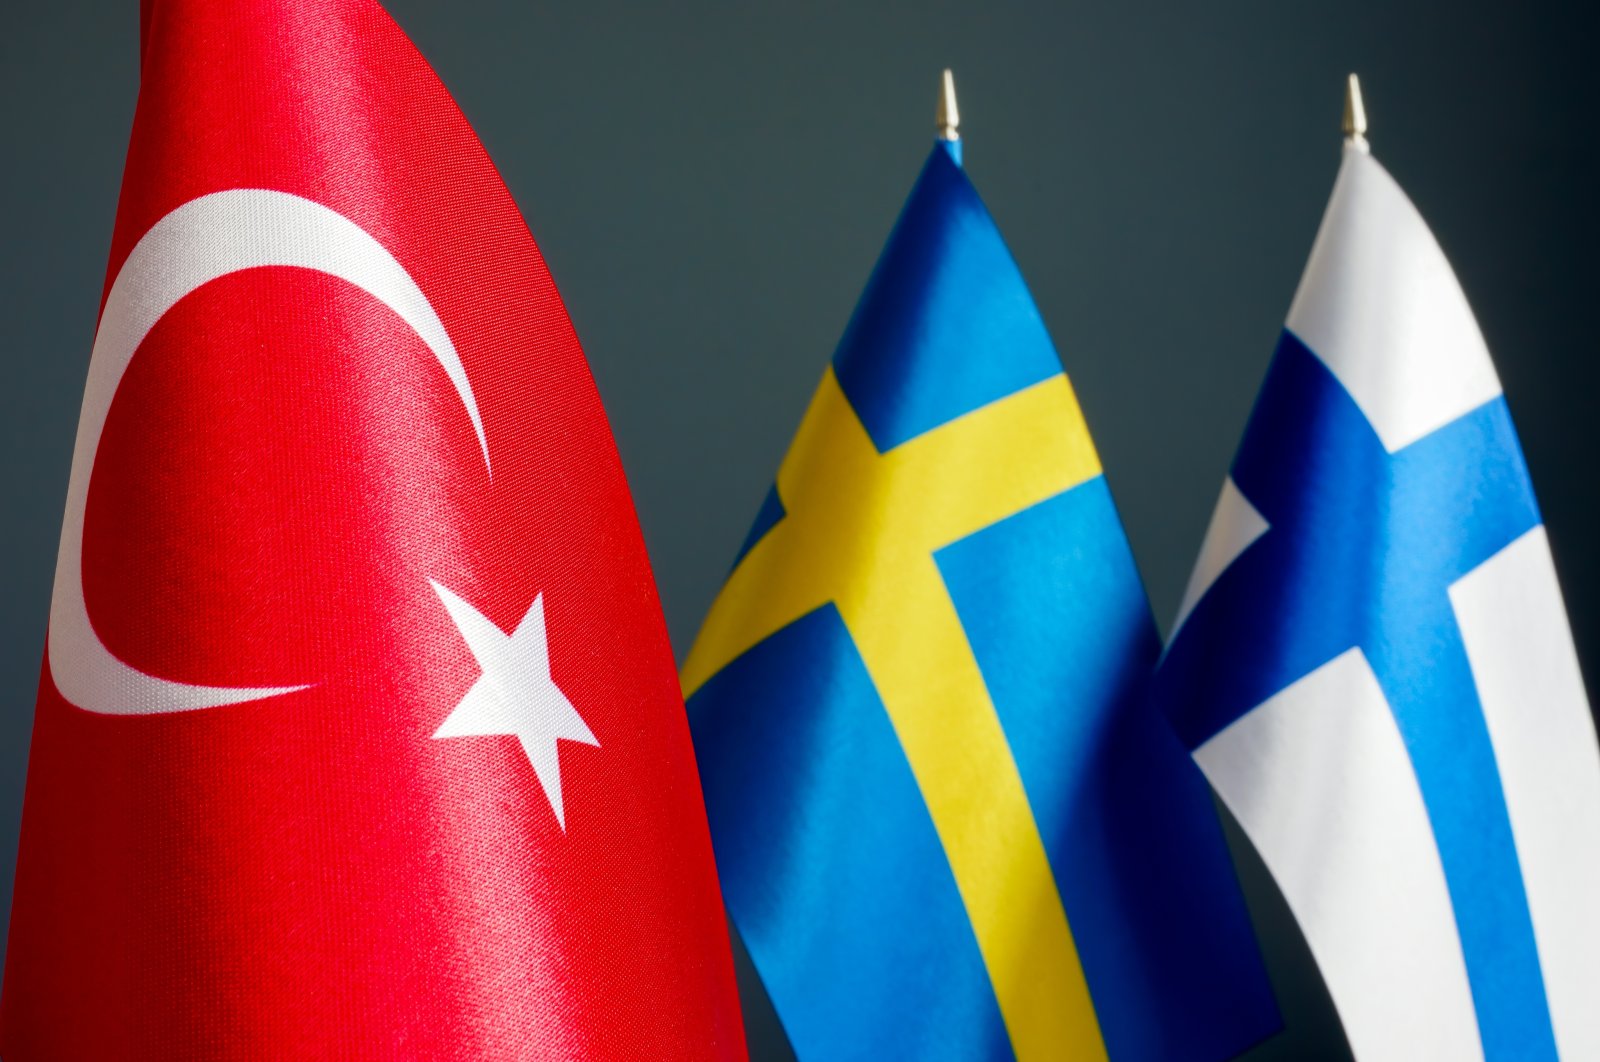 Turki melawan Swedia dan Finlandia atau sebaliknya?